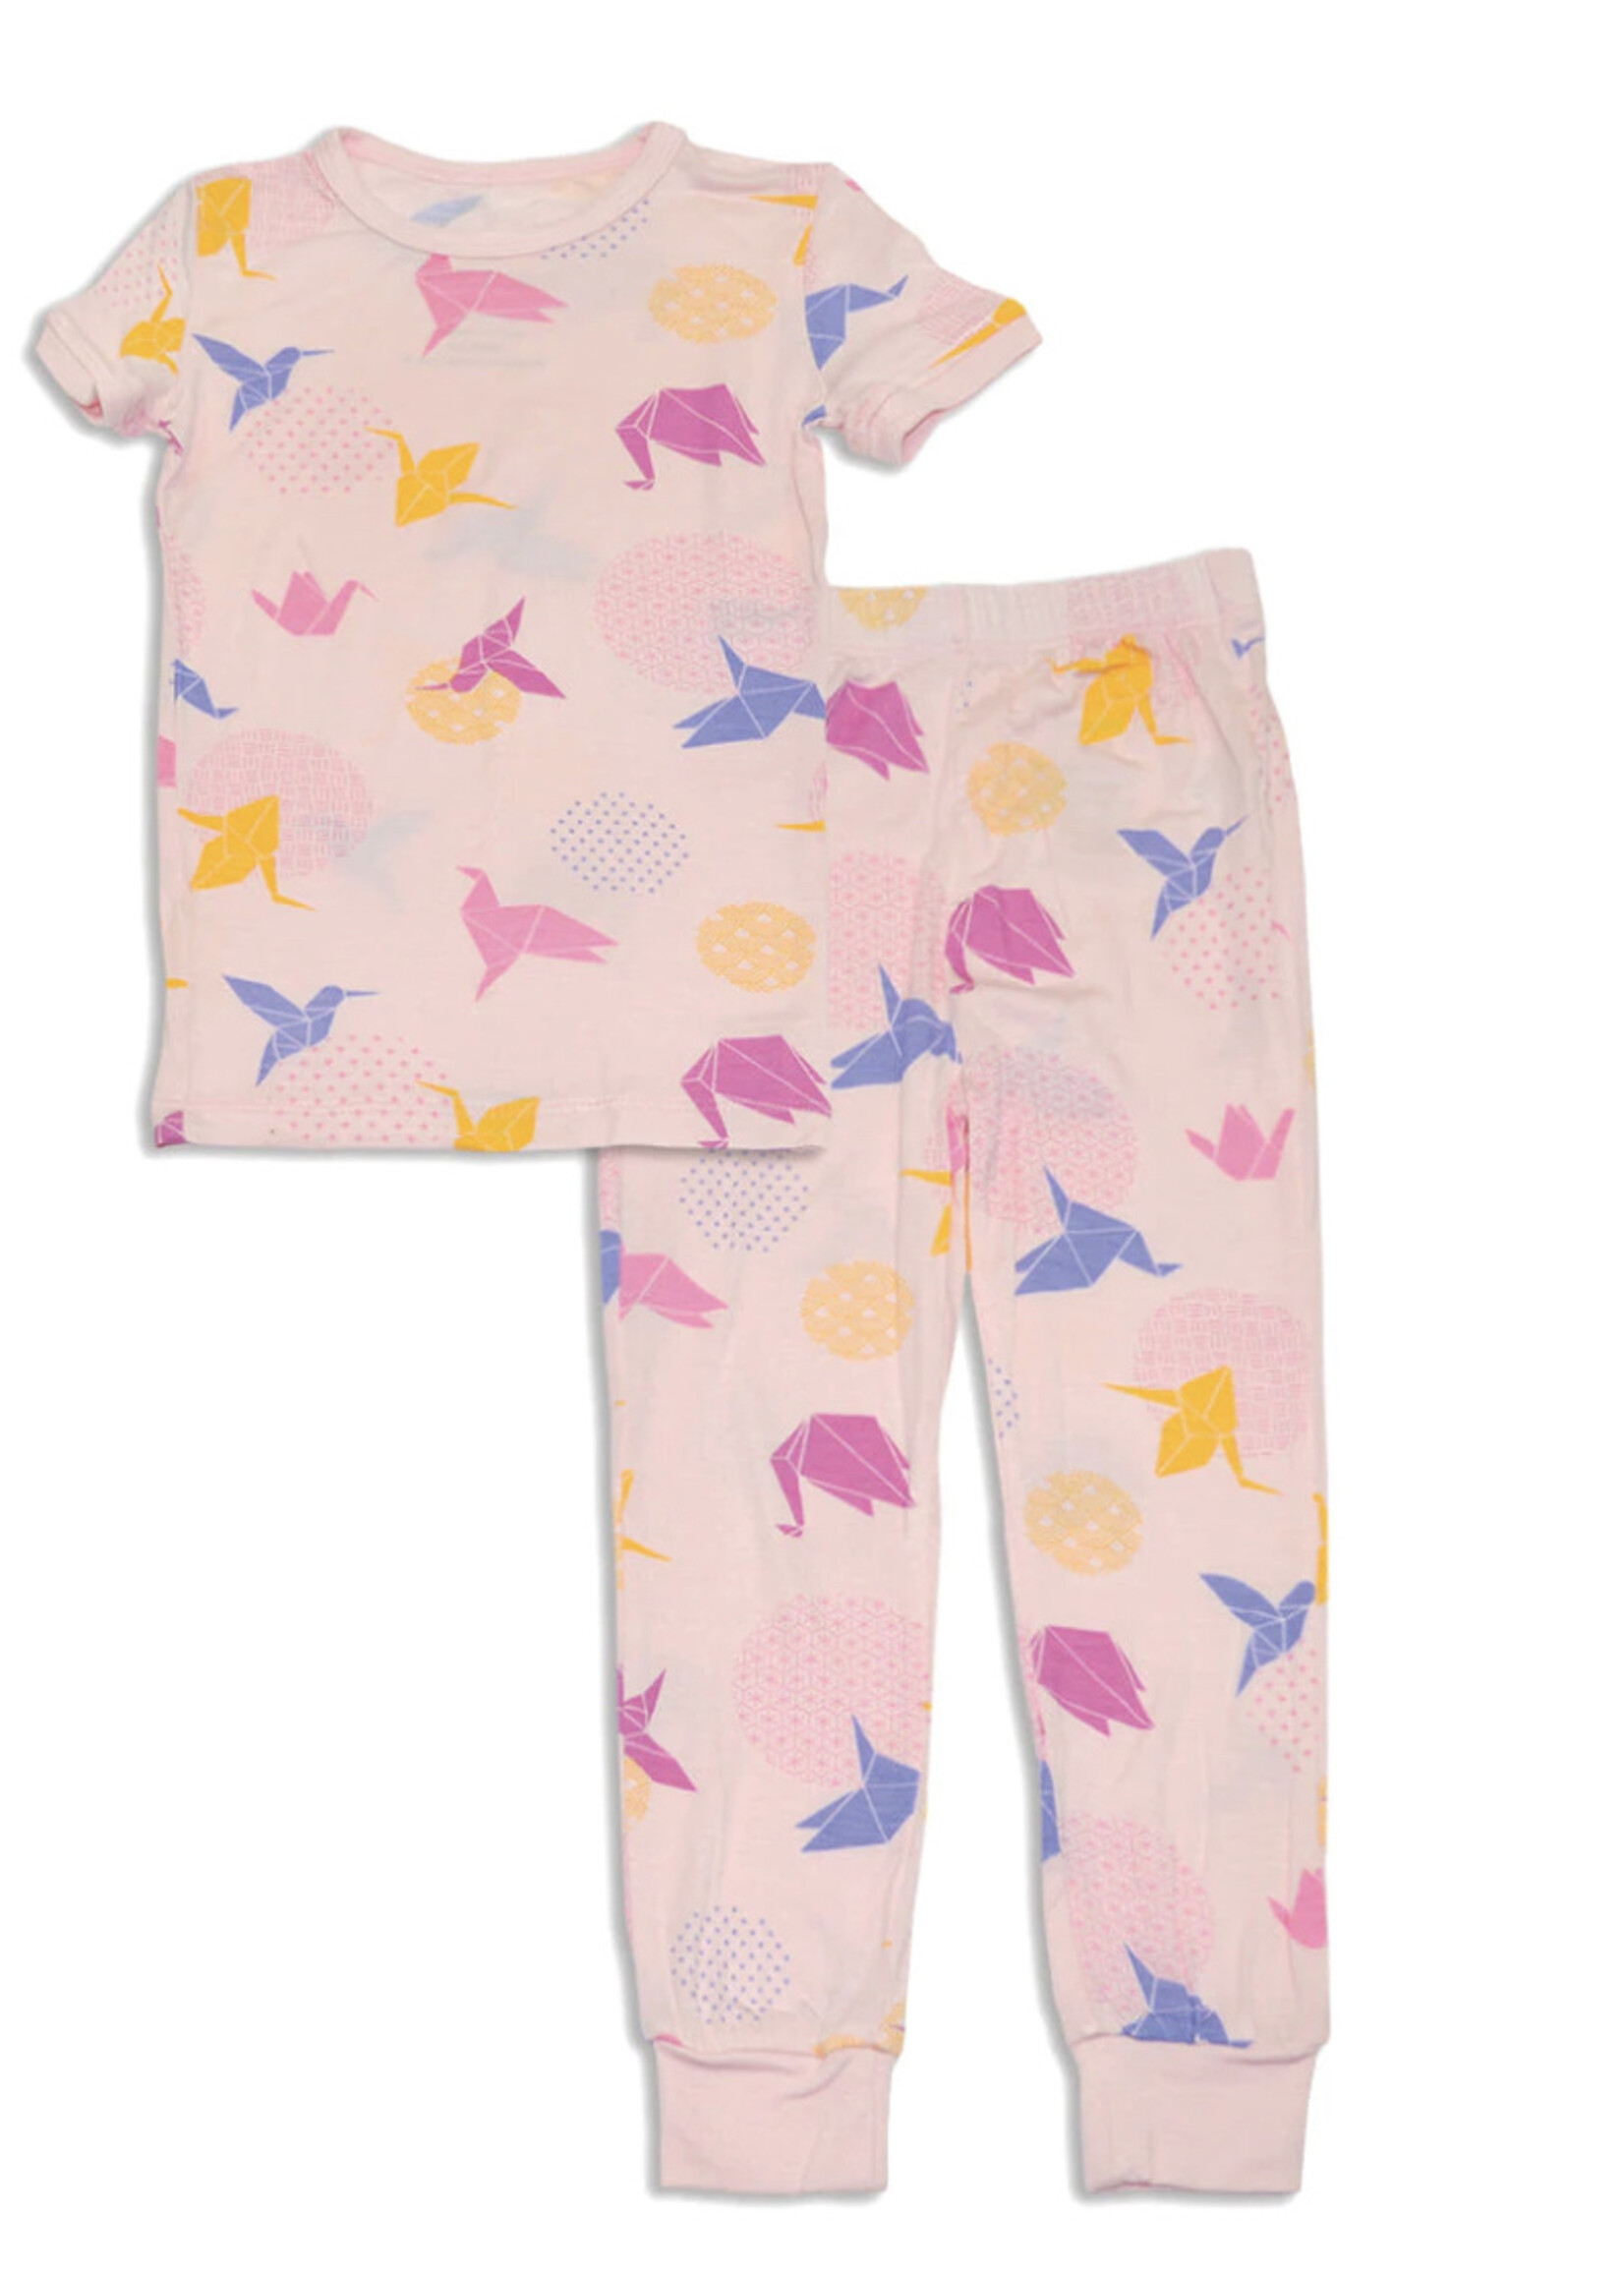 Silkberry Baby Bamboo Short Sleeve Pajama Set (Origami Print)